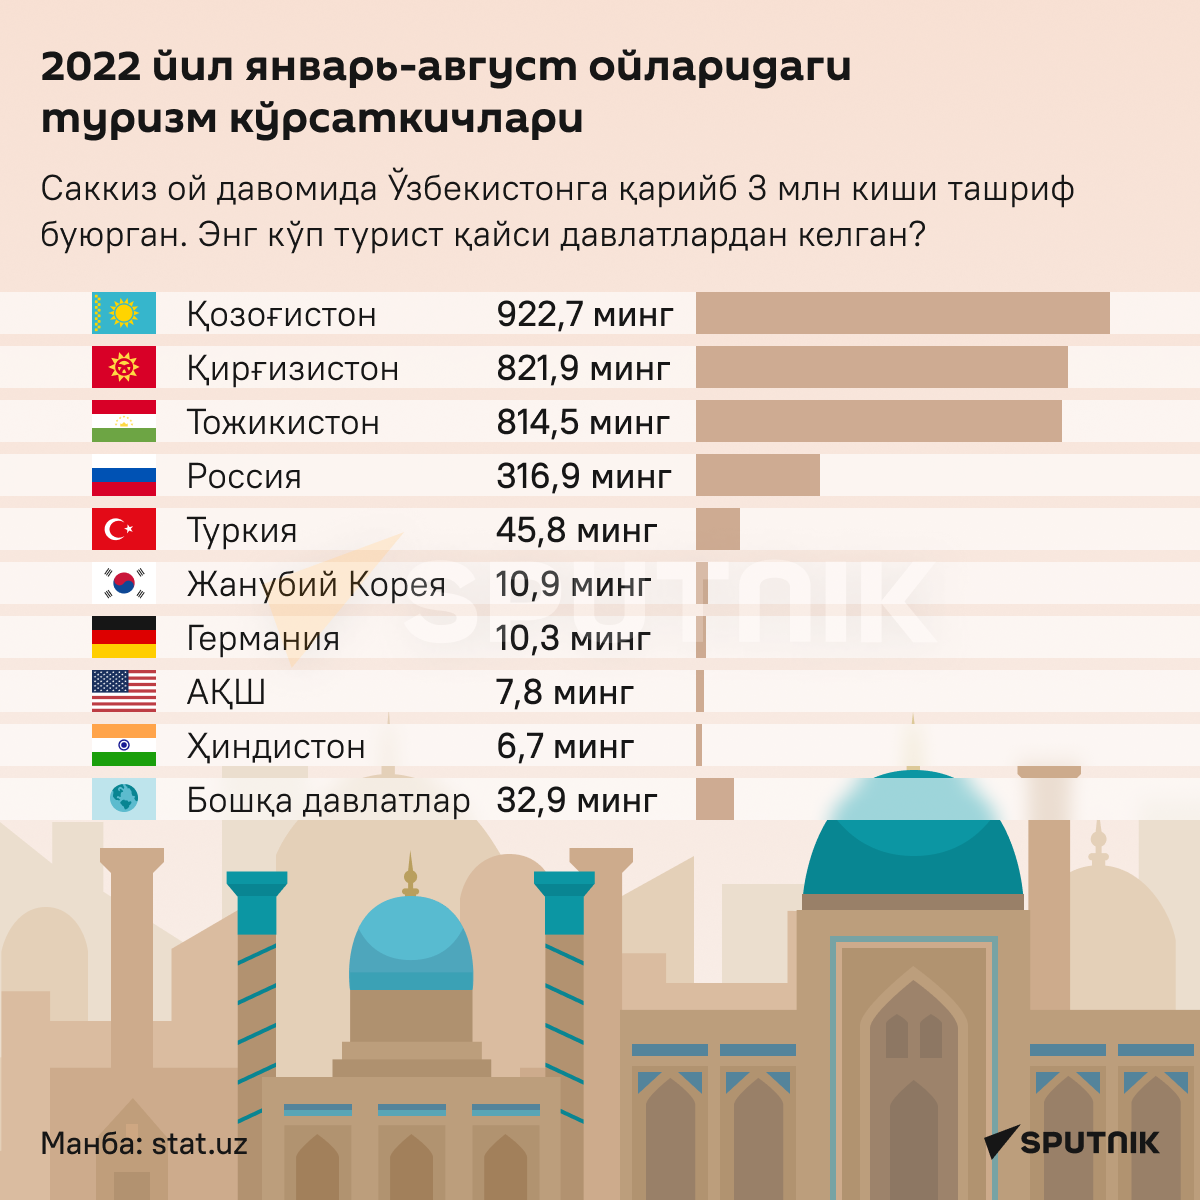 2022 йил январь-август ойларидаги туризм курсатчиклари инфографика - Sputnik Ўзбекистон